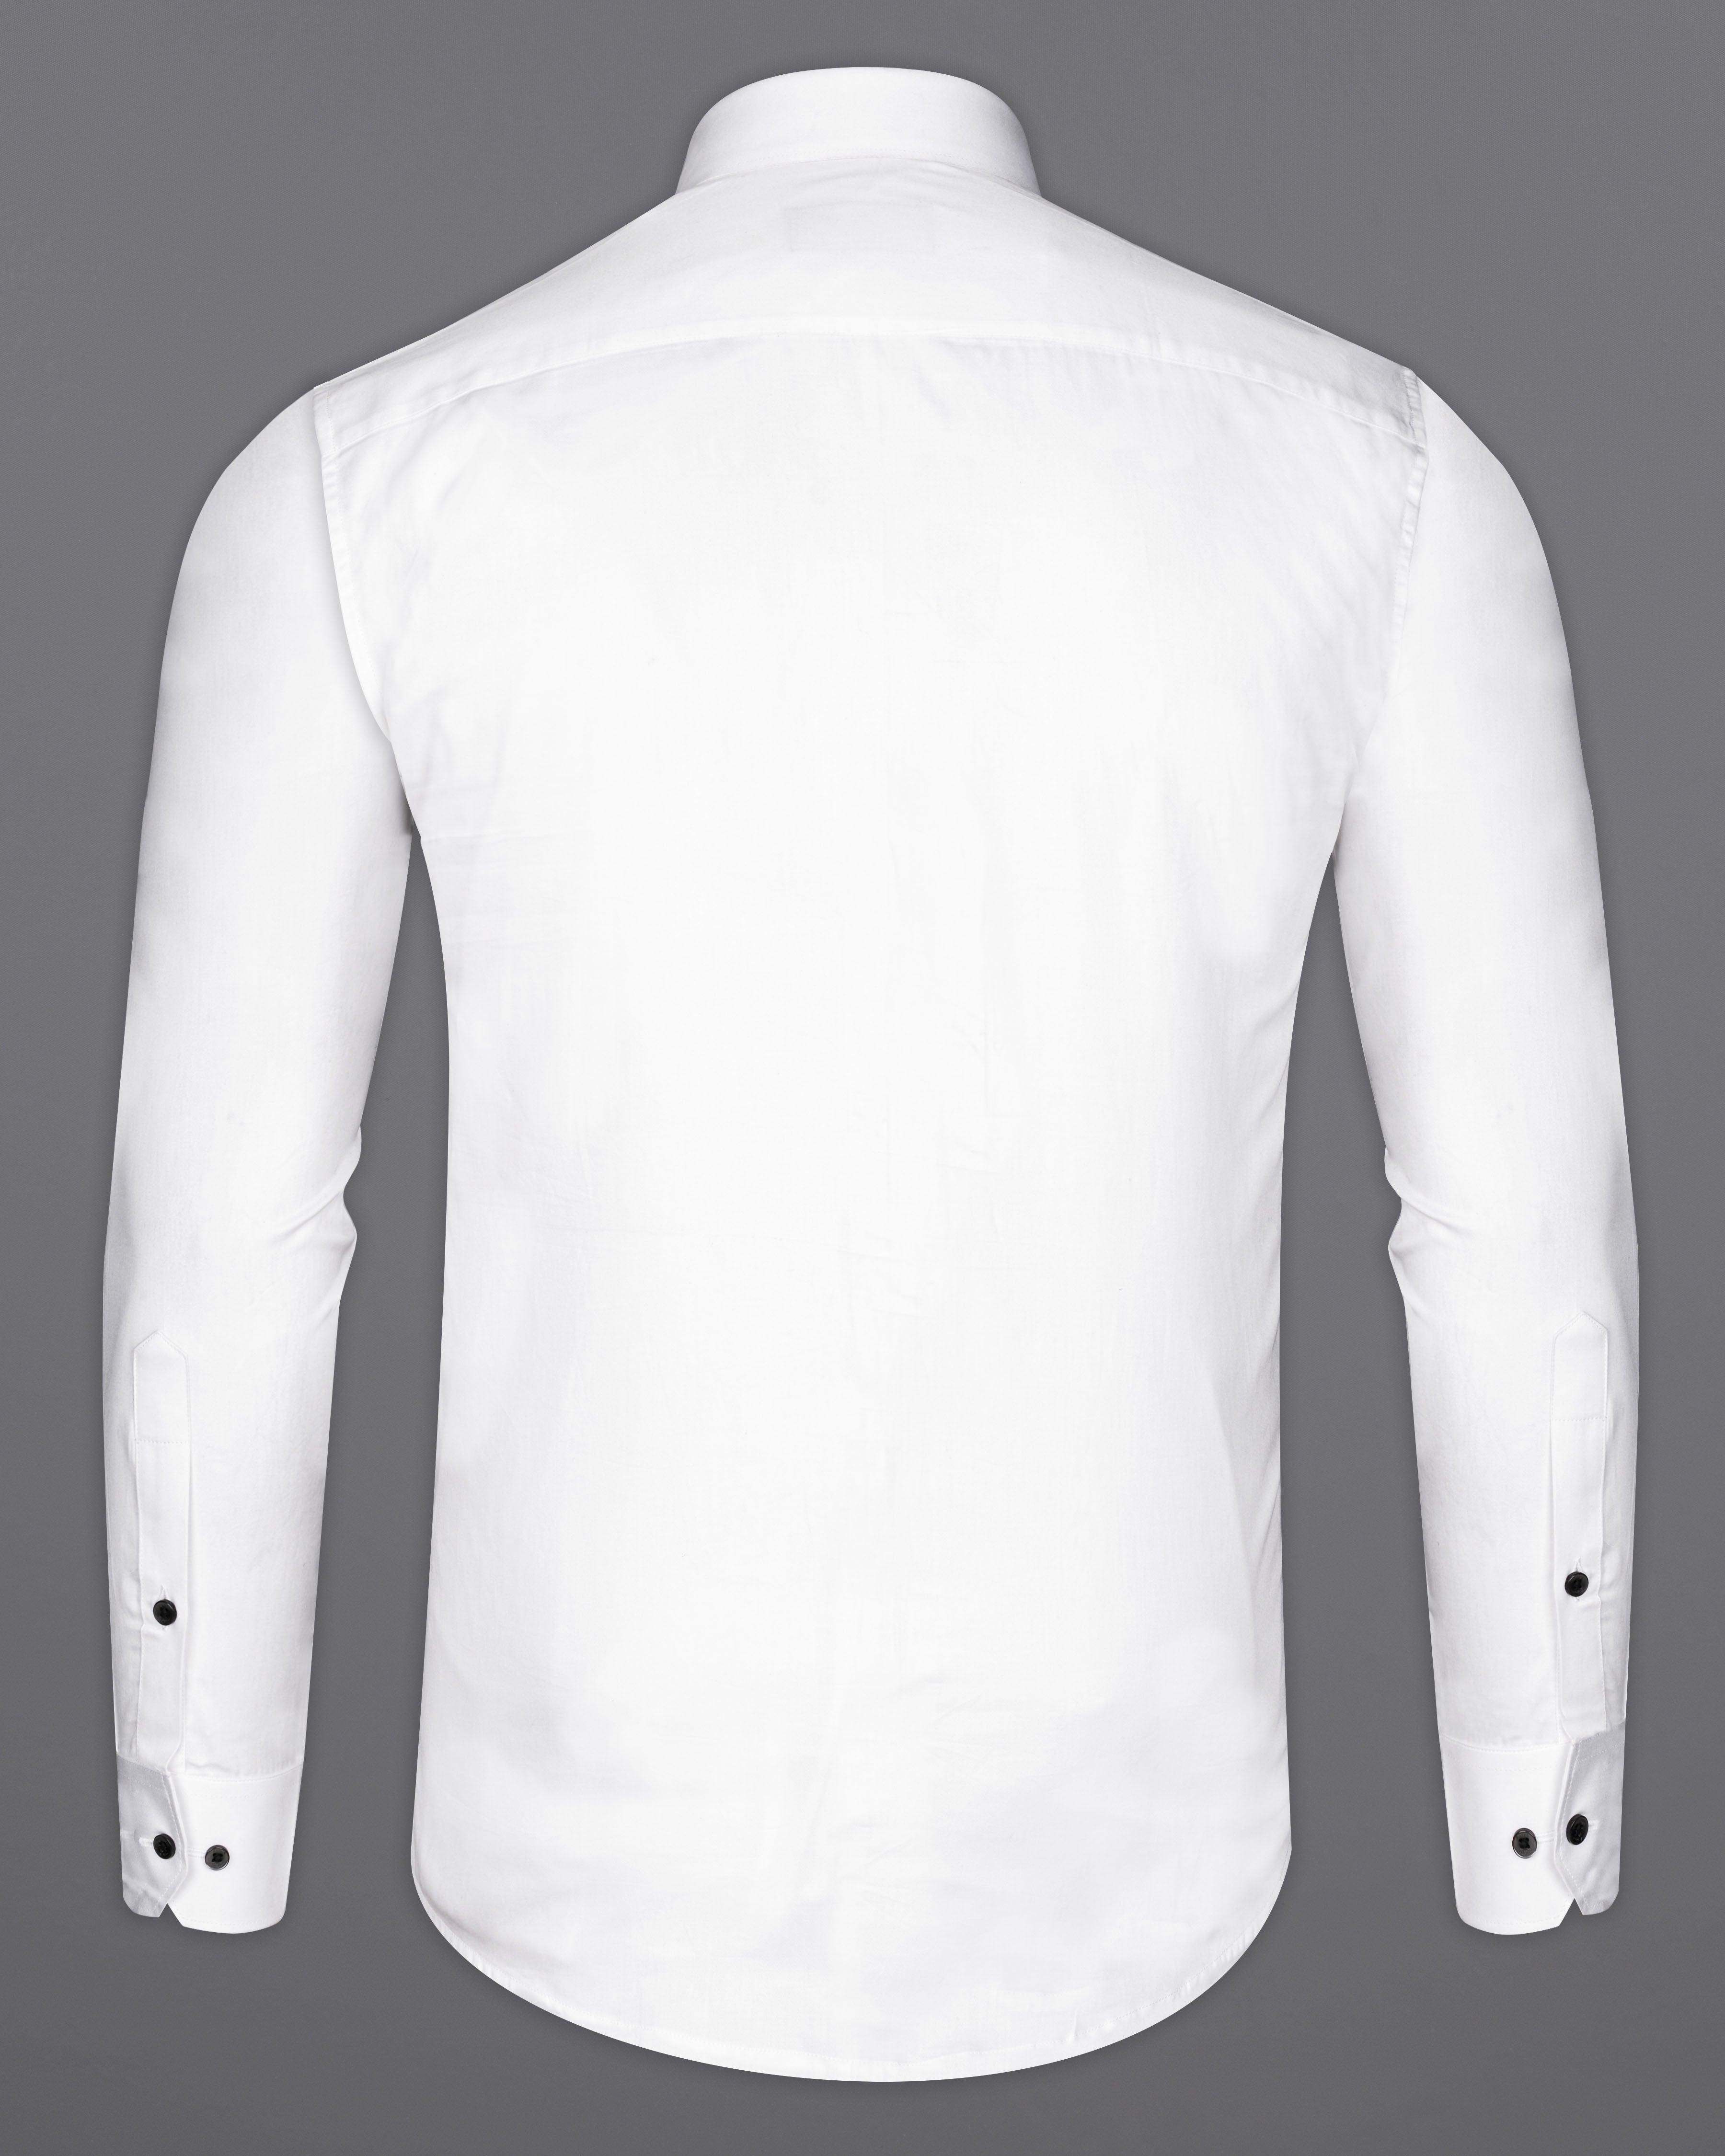 Bright White Subtle Sheen Leaves Hand Embroidered Super Soft Premium Cotton Designer Shirt 1062-BLK-E053-38,1062-BLK-E053-H-38,1062-BLK-E053-39,1062-BLK-E053-H-39,1062-BLK-E053-40,1062-BLK-E053-H-40,1062-BLK-E053-42,1062-BLK-E053-H-42,1062-BLK-E053-44,1062-BLK-E053-H-44,1062-BLK-E053-46,1062-BLK-E053-H-46,1062-BLK-E053-48,1062-BLK-E053-H-48,1062-BLK-E053-50,1062-BLK-E053-H-50,1062-BLK-E053-52,1062-BLK-E053-H-52